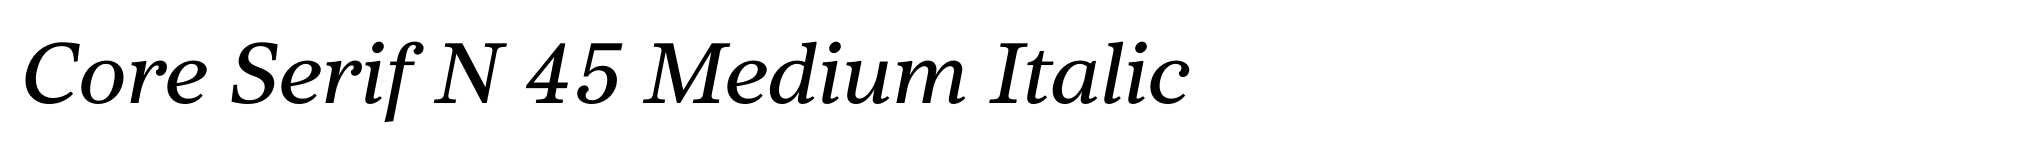 Core Serif N 45 Medium Italic image